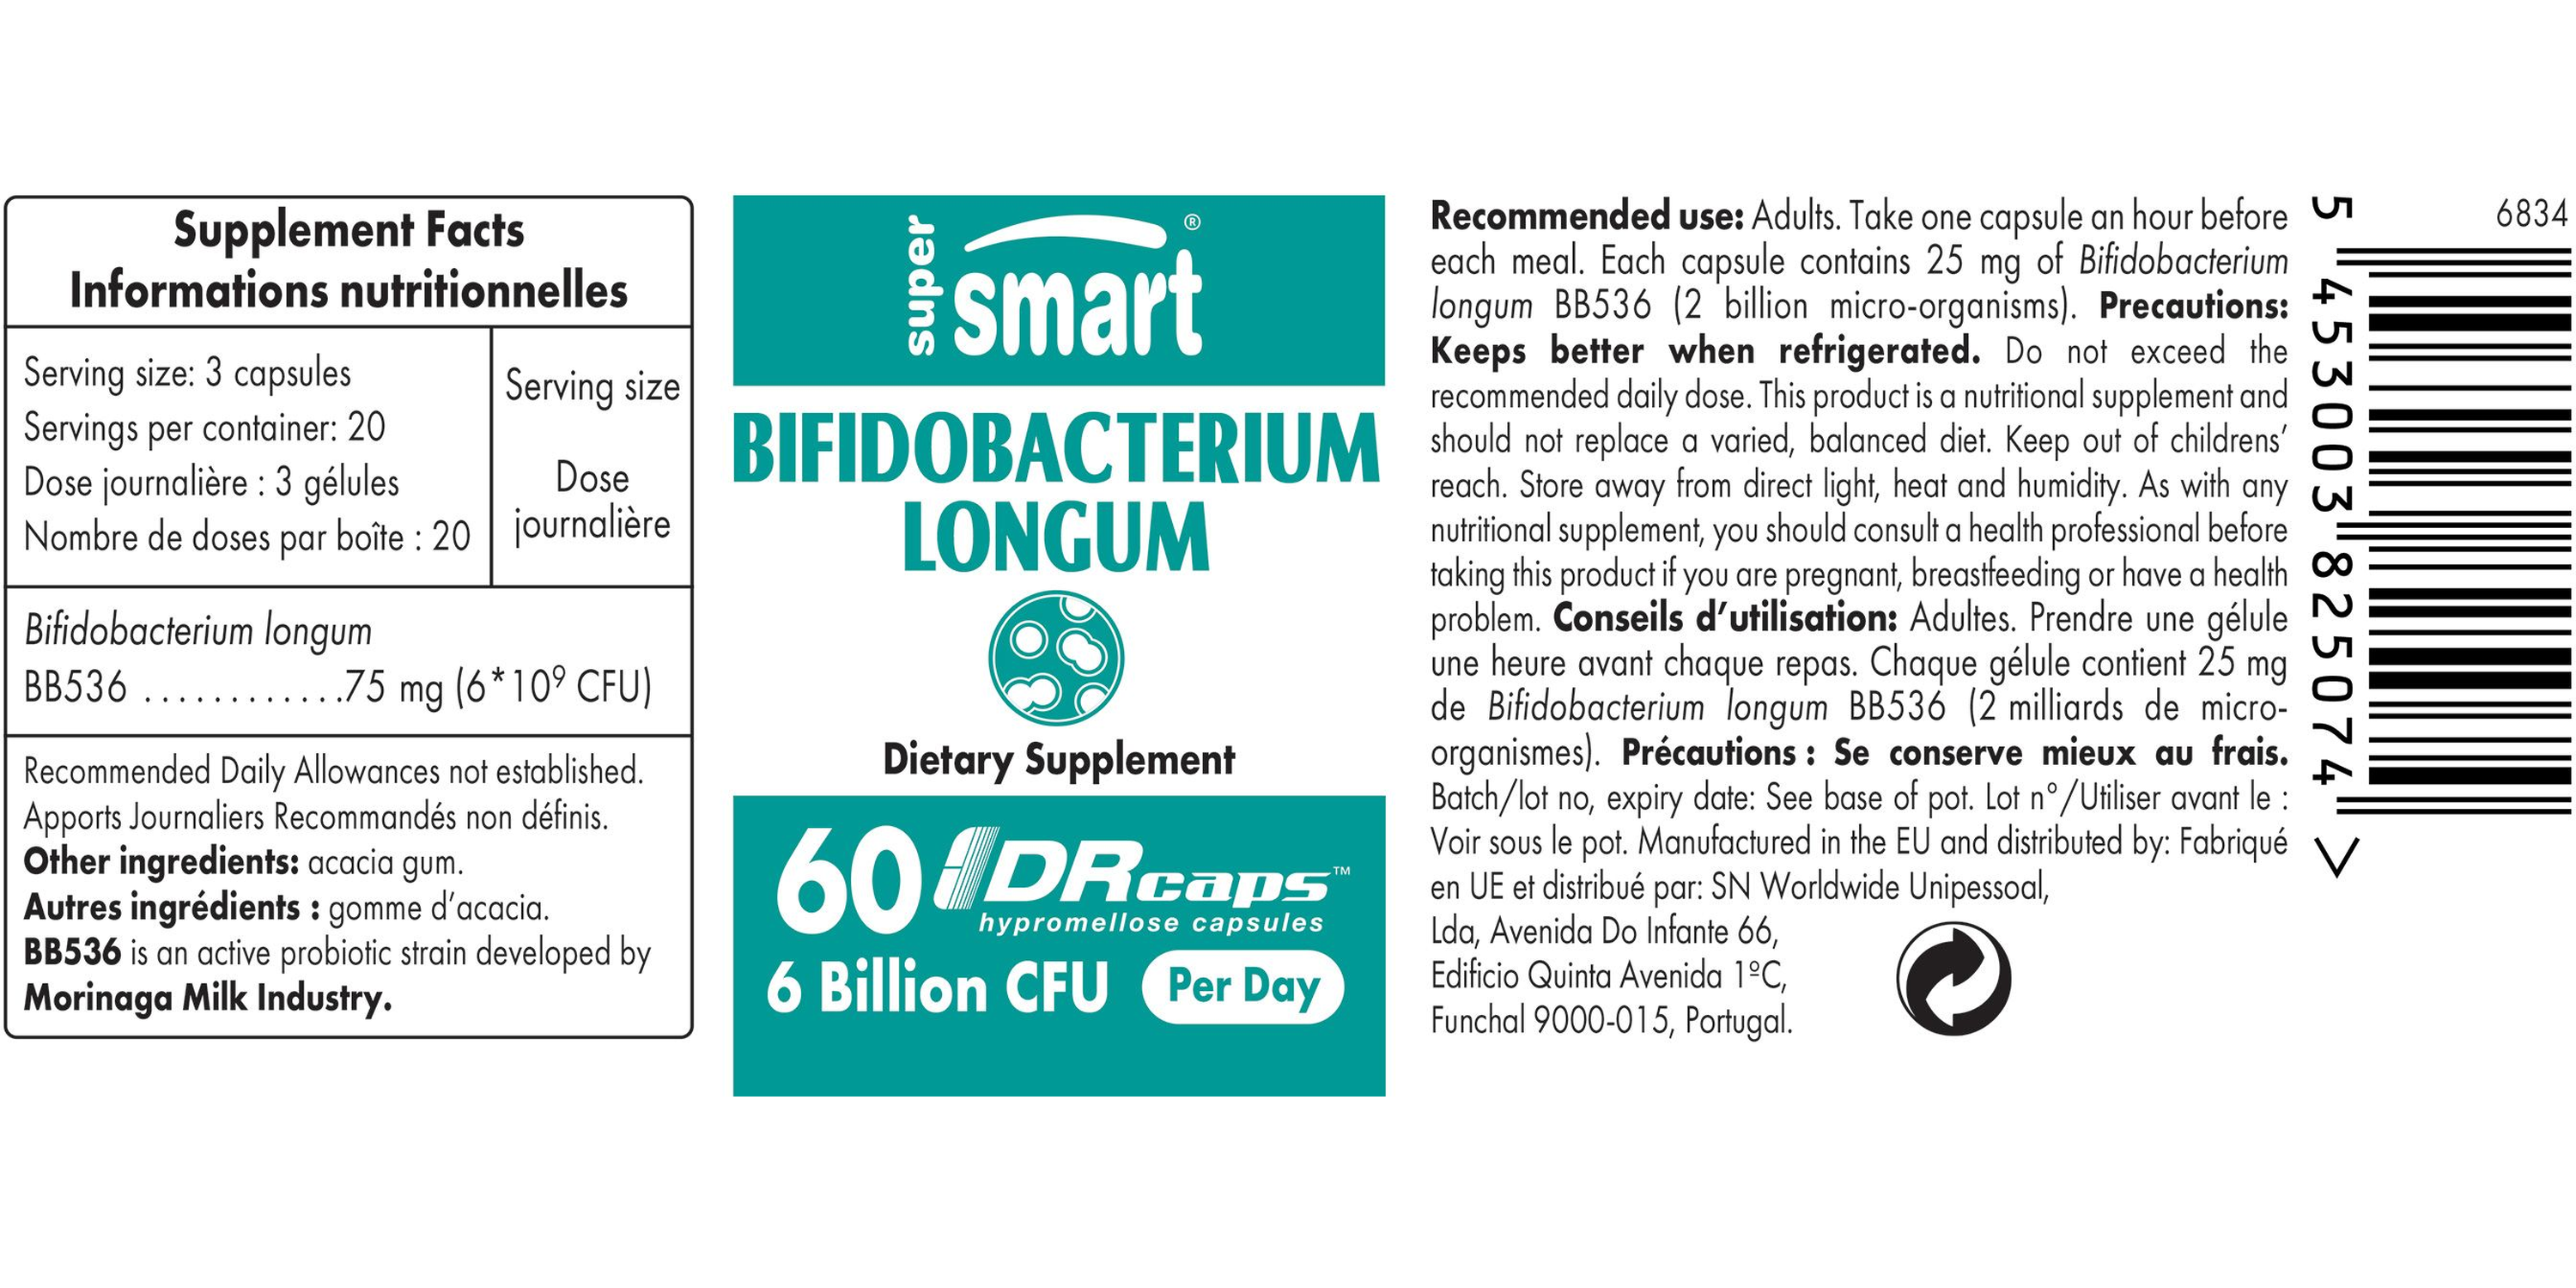 Bifidobacterium longum (BB536)